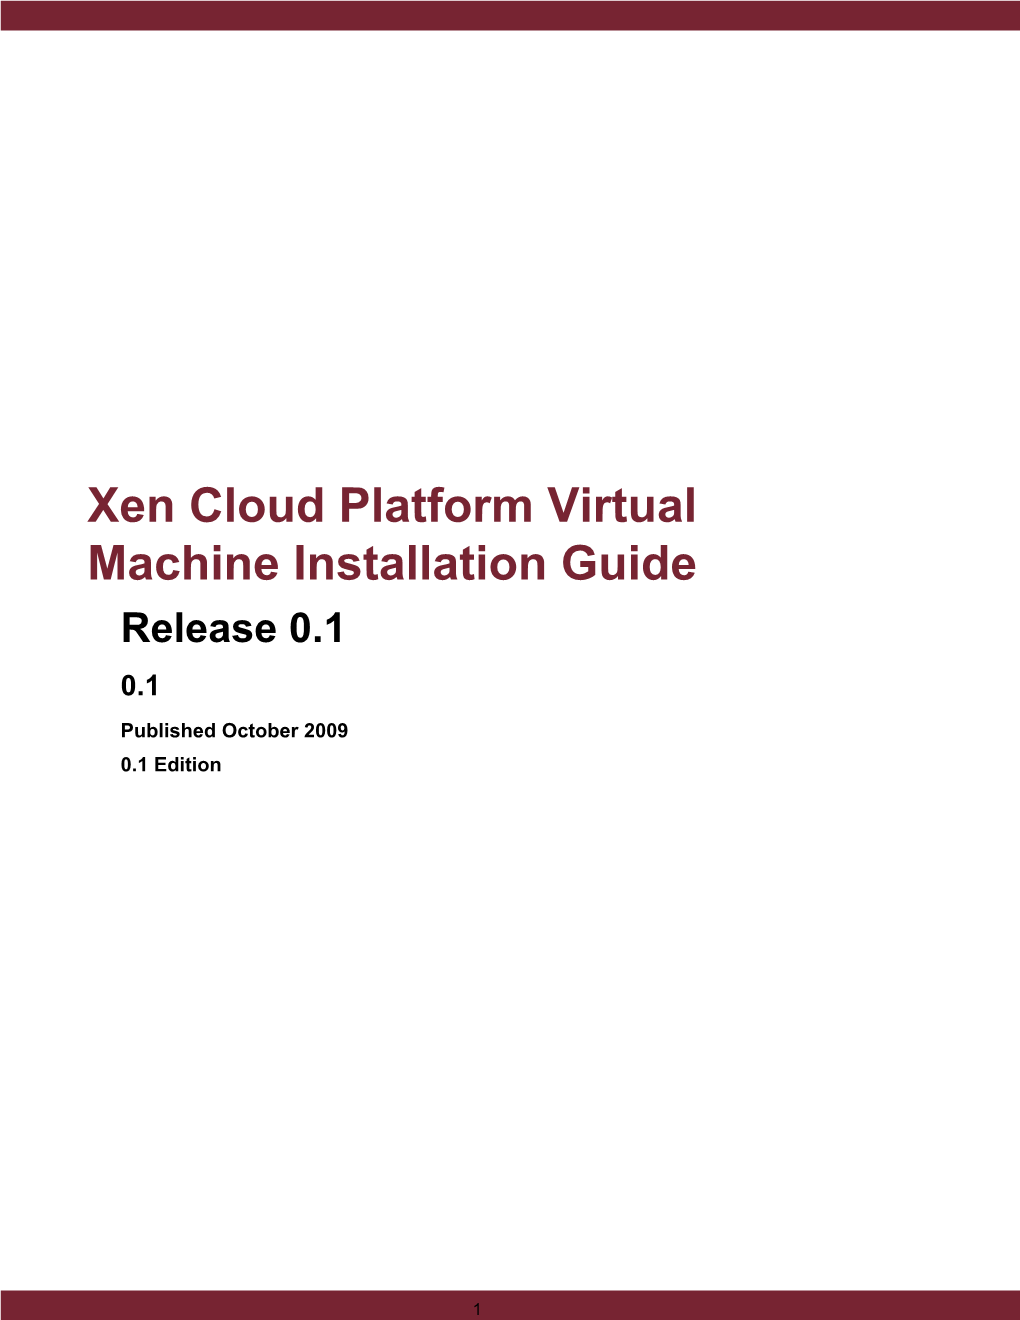 Xen Cloud Platform Virtual Machine Installation Guide Release 0.1 0.1